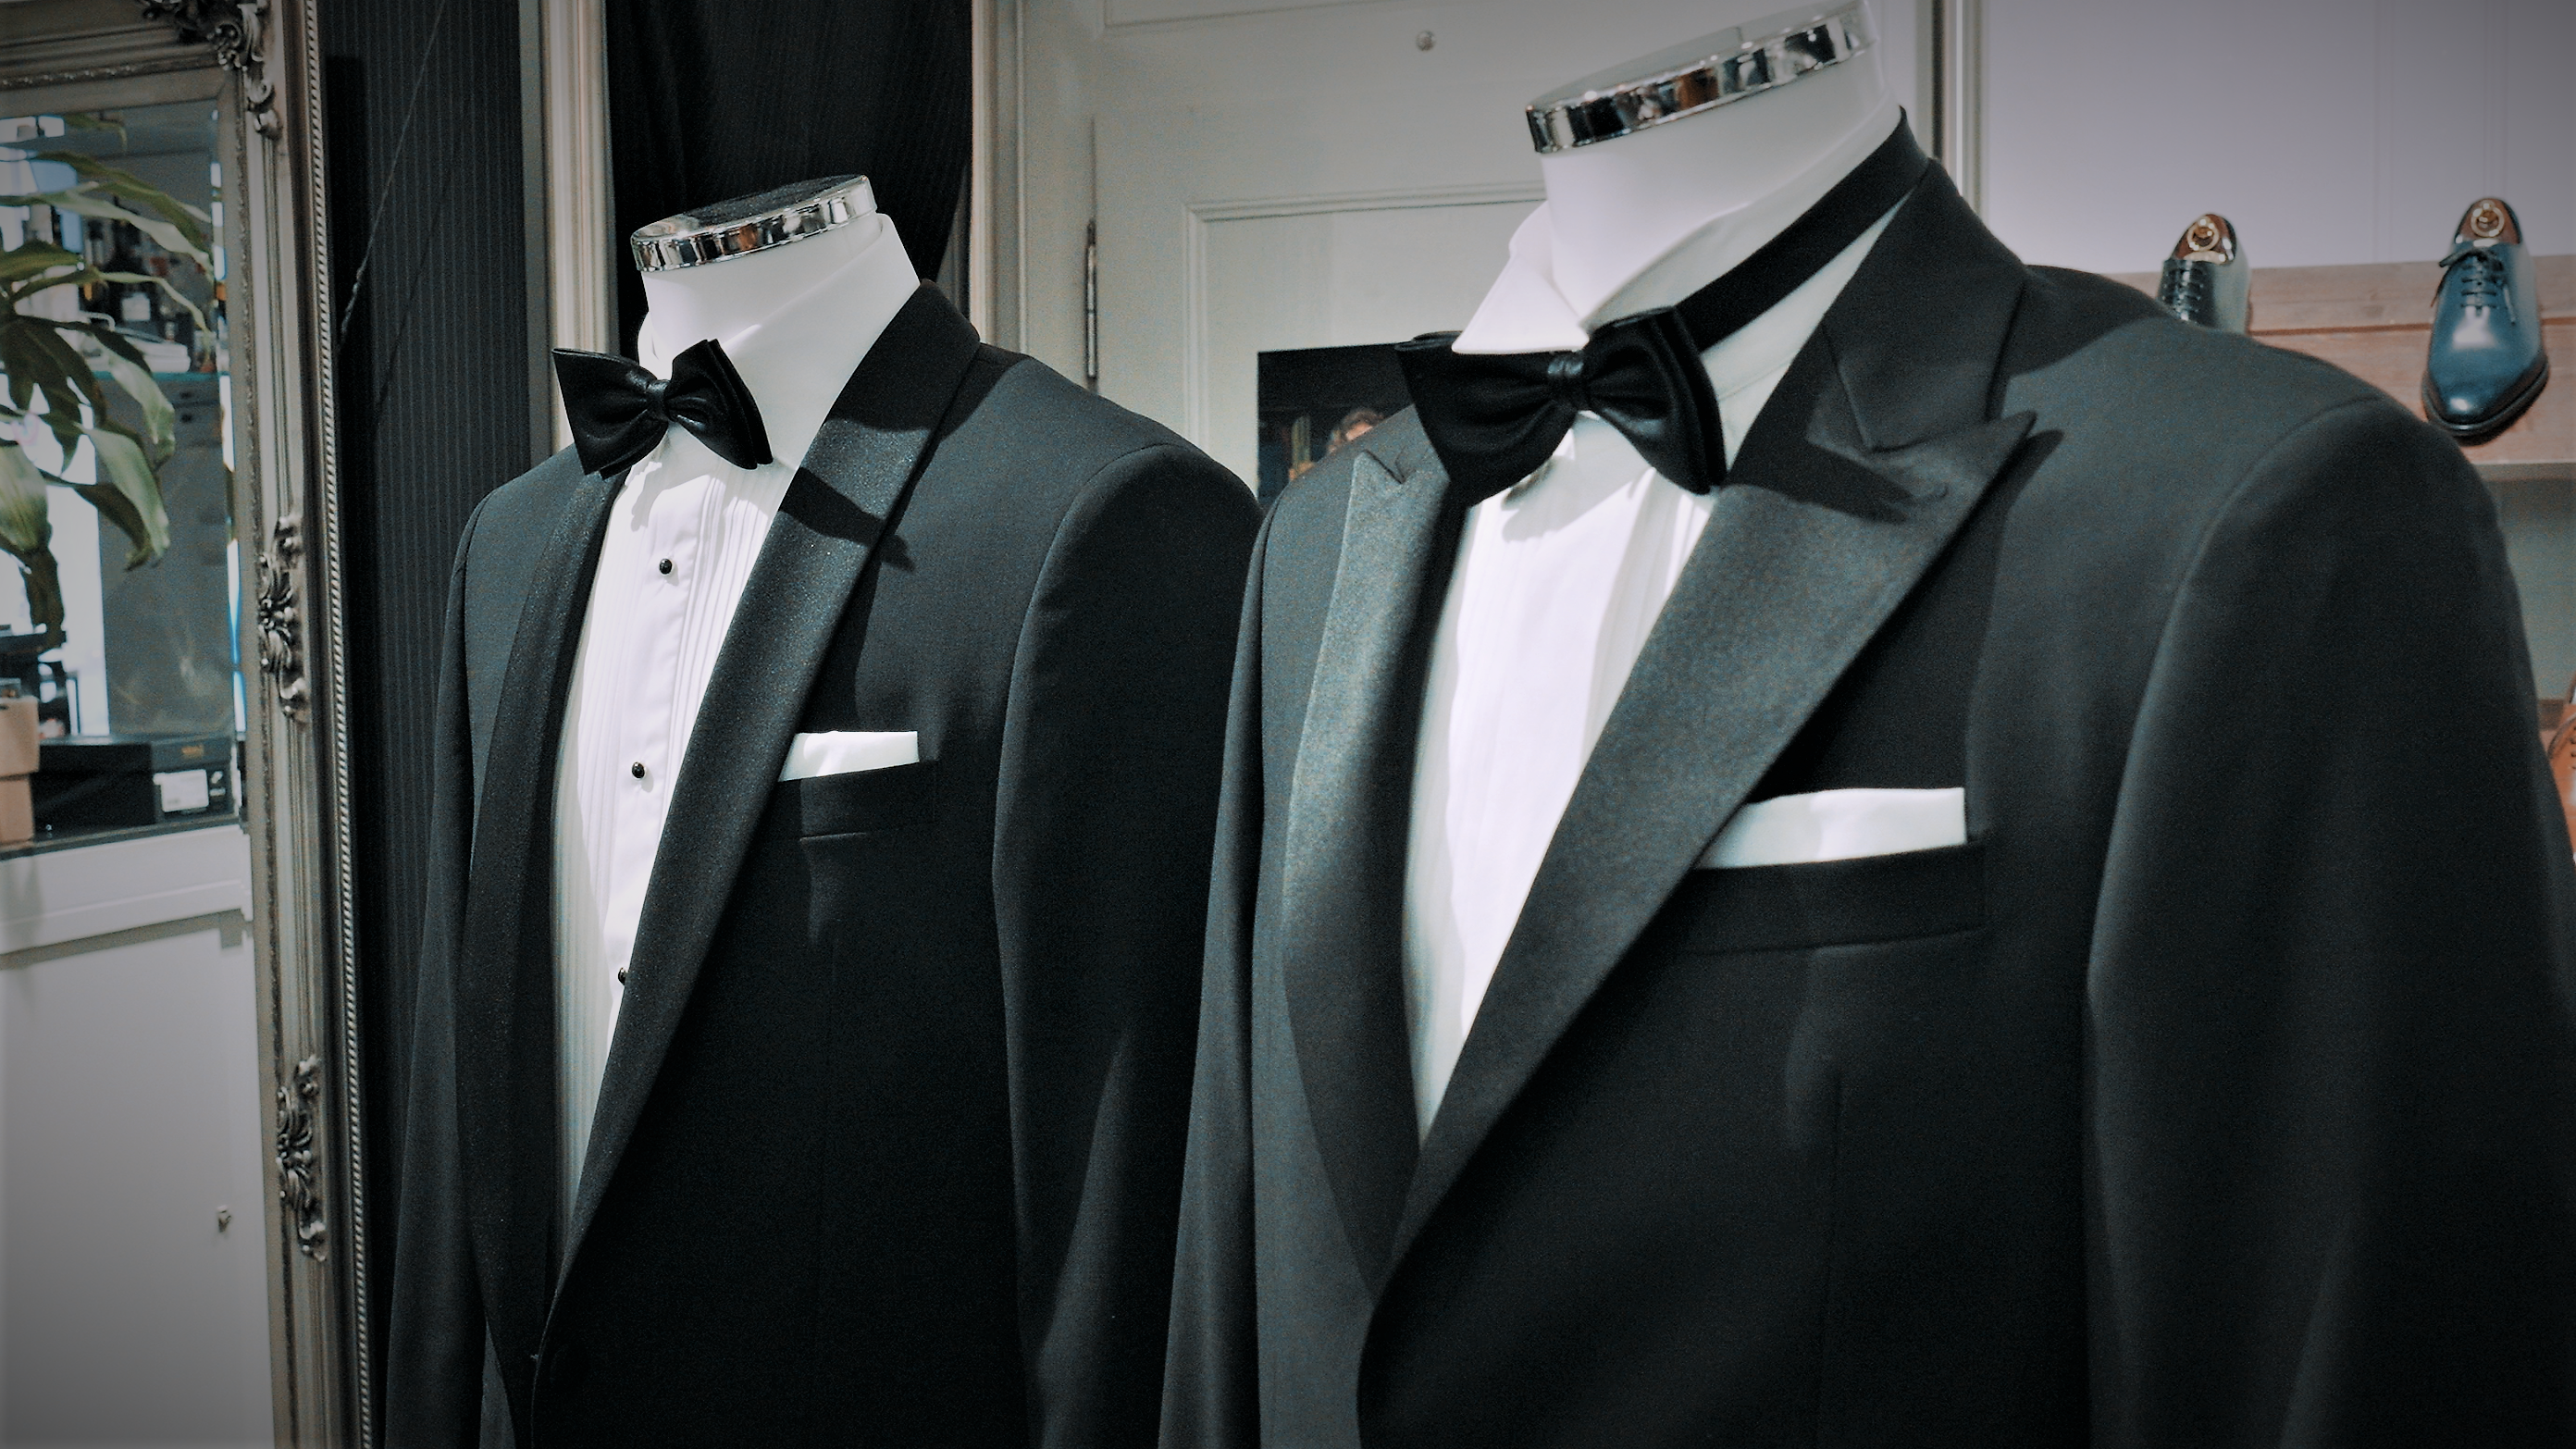 Viktor - Dresscode "Black Tie"